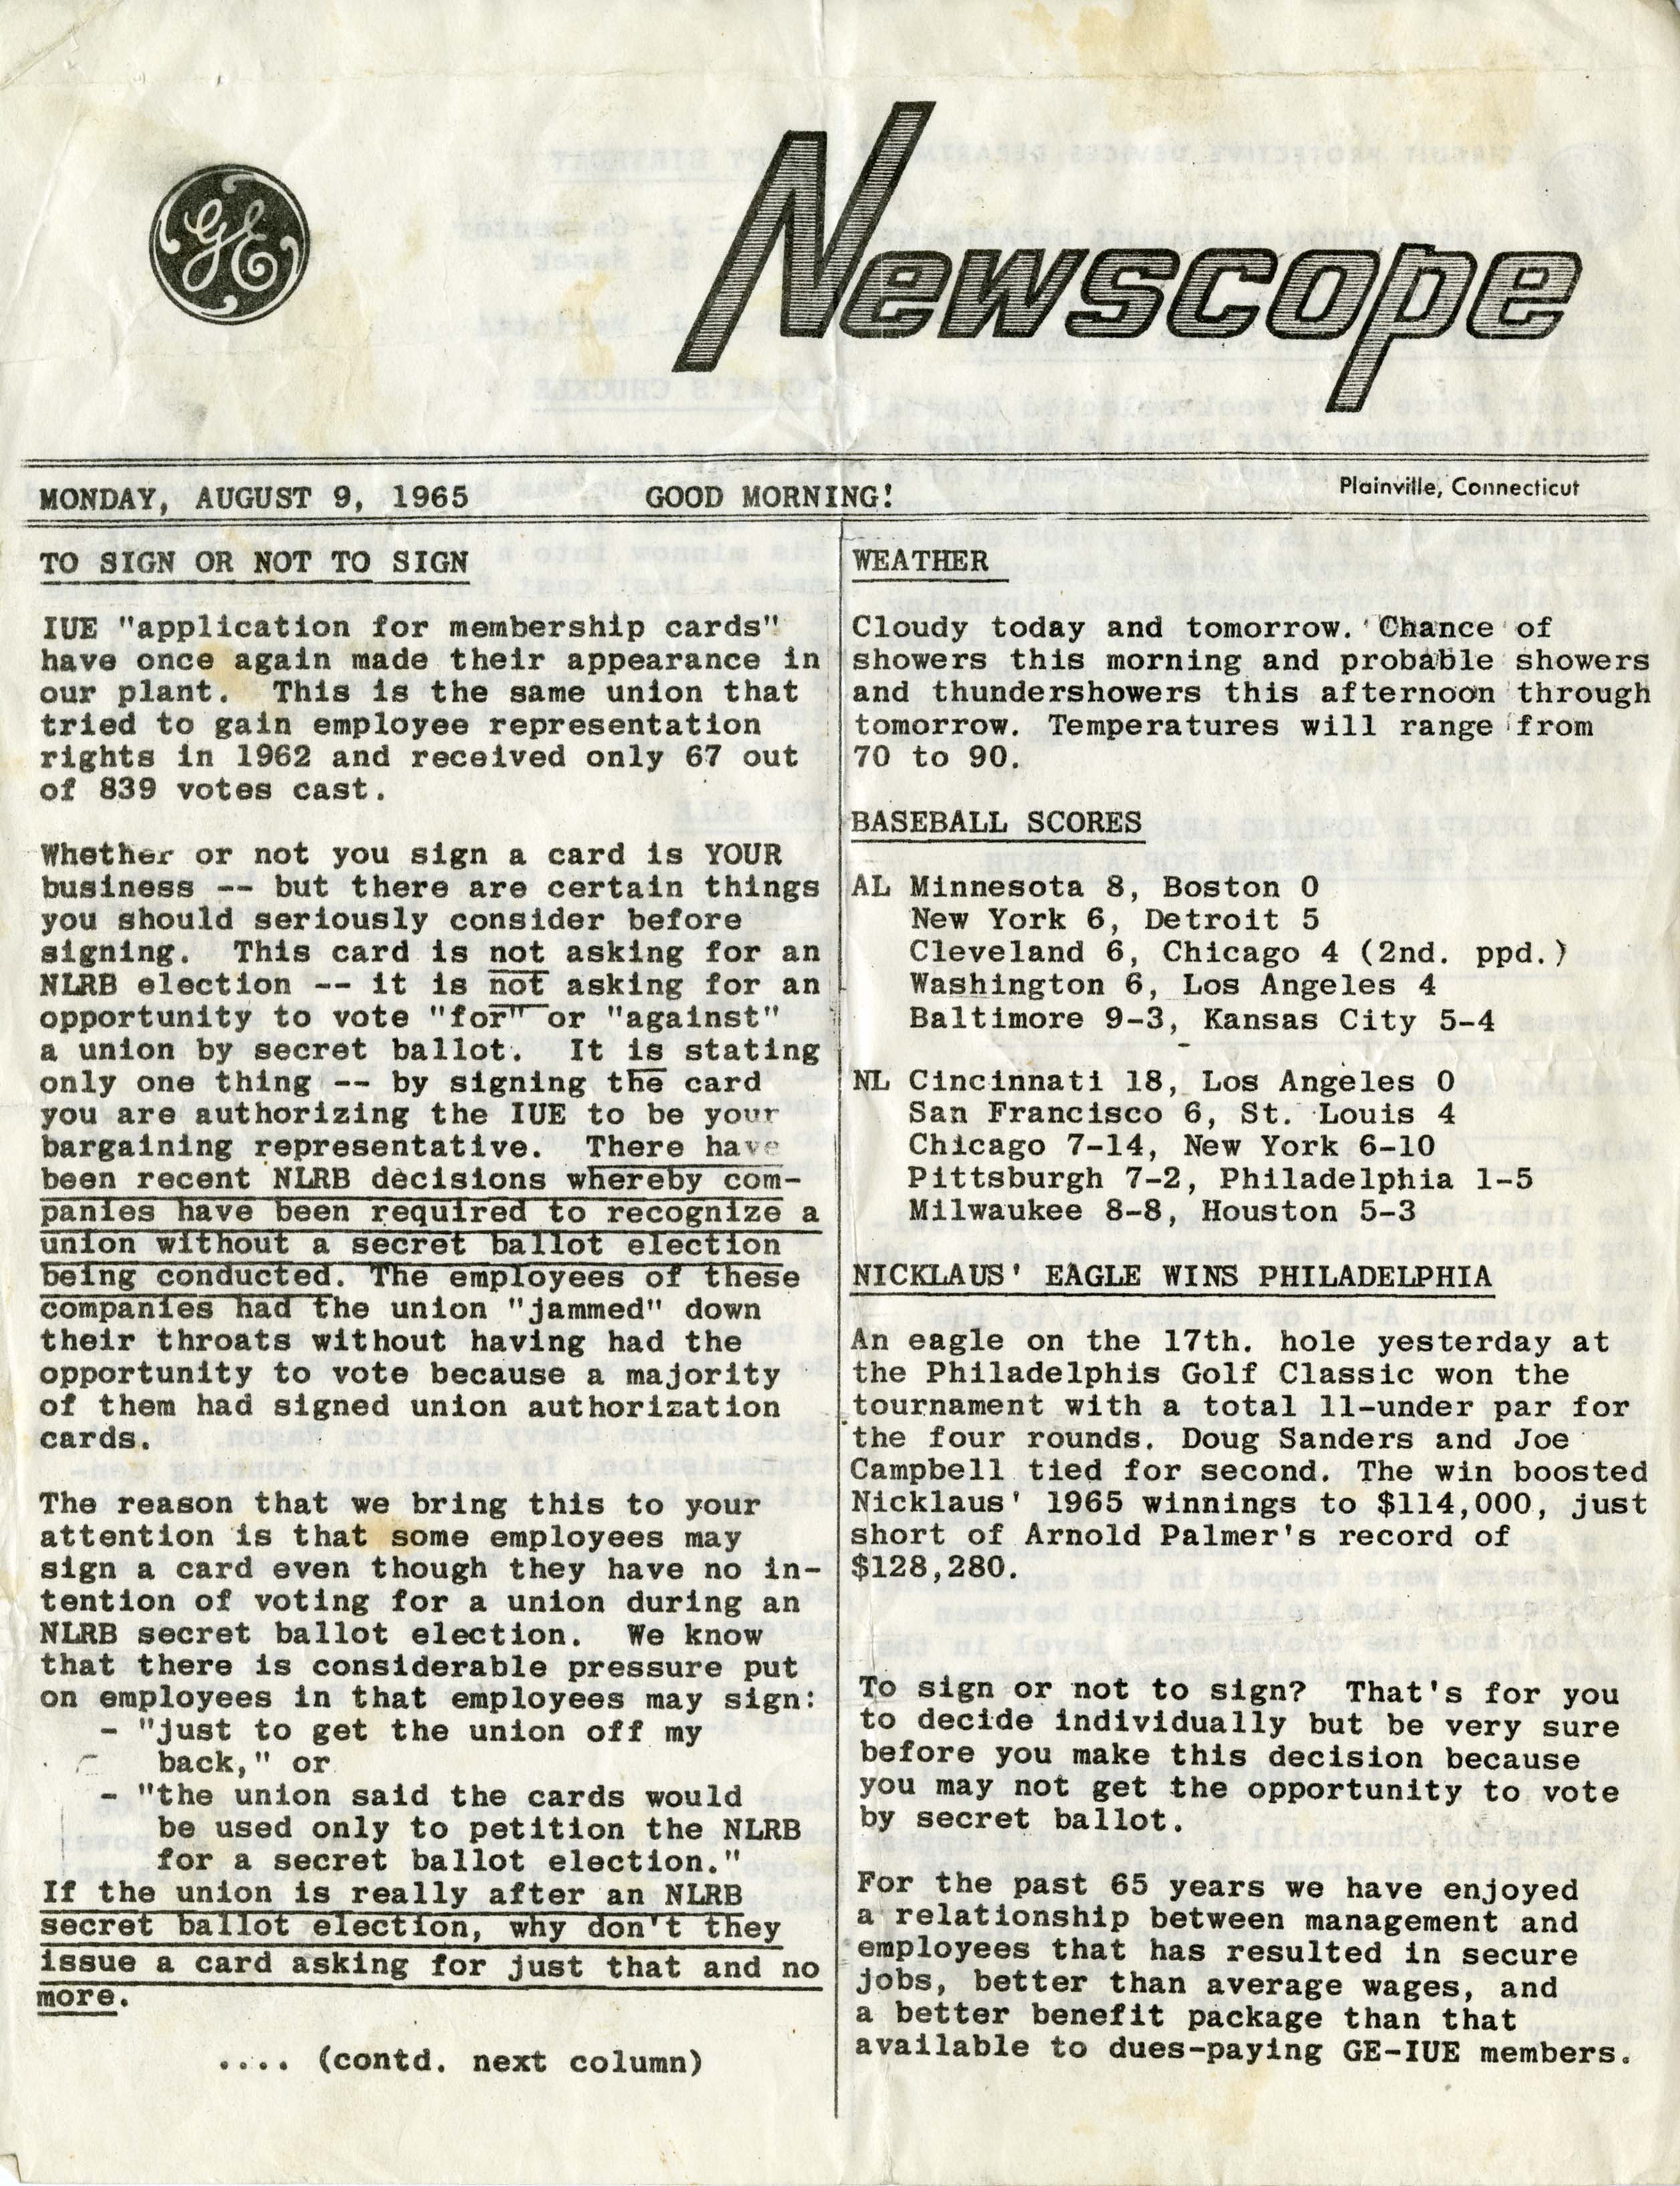 General Electric Newscope, 1965 (Nicholas J. Tomassetti Papers)